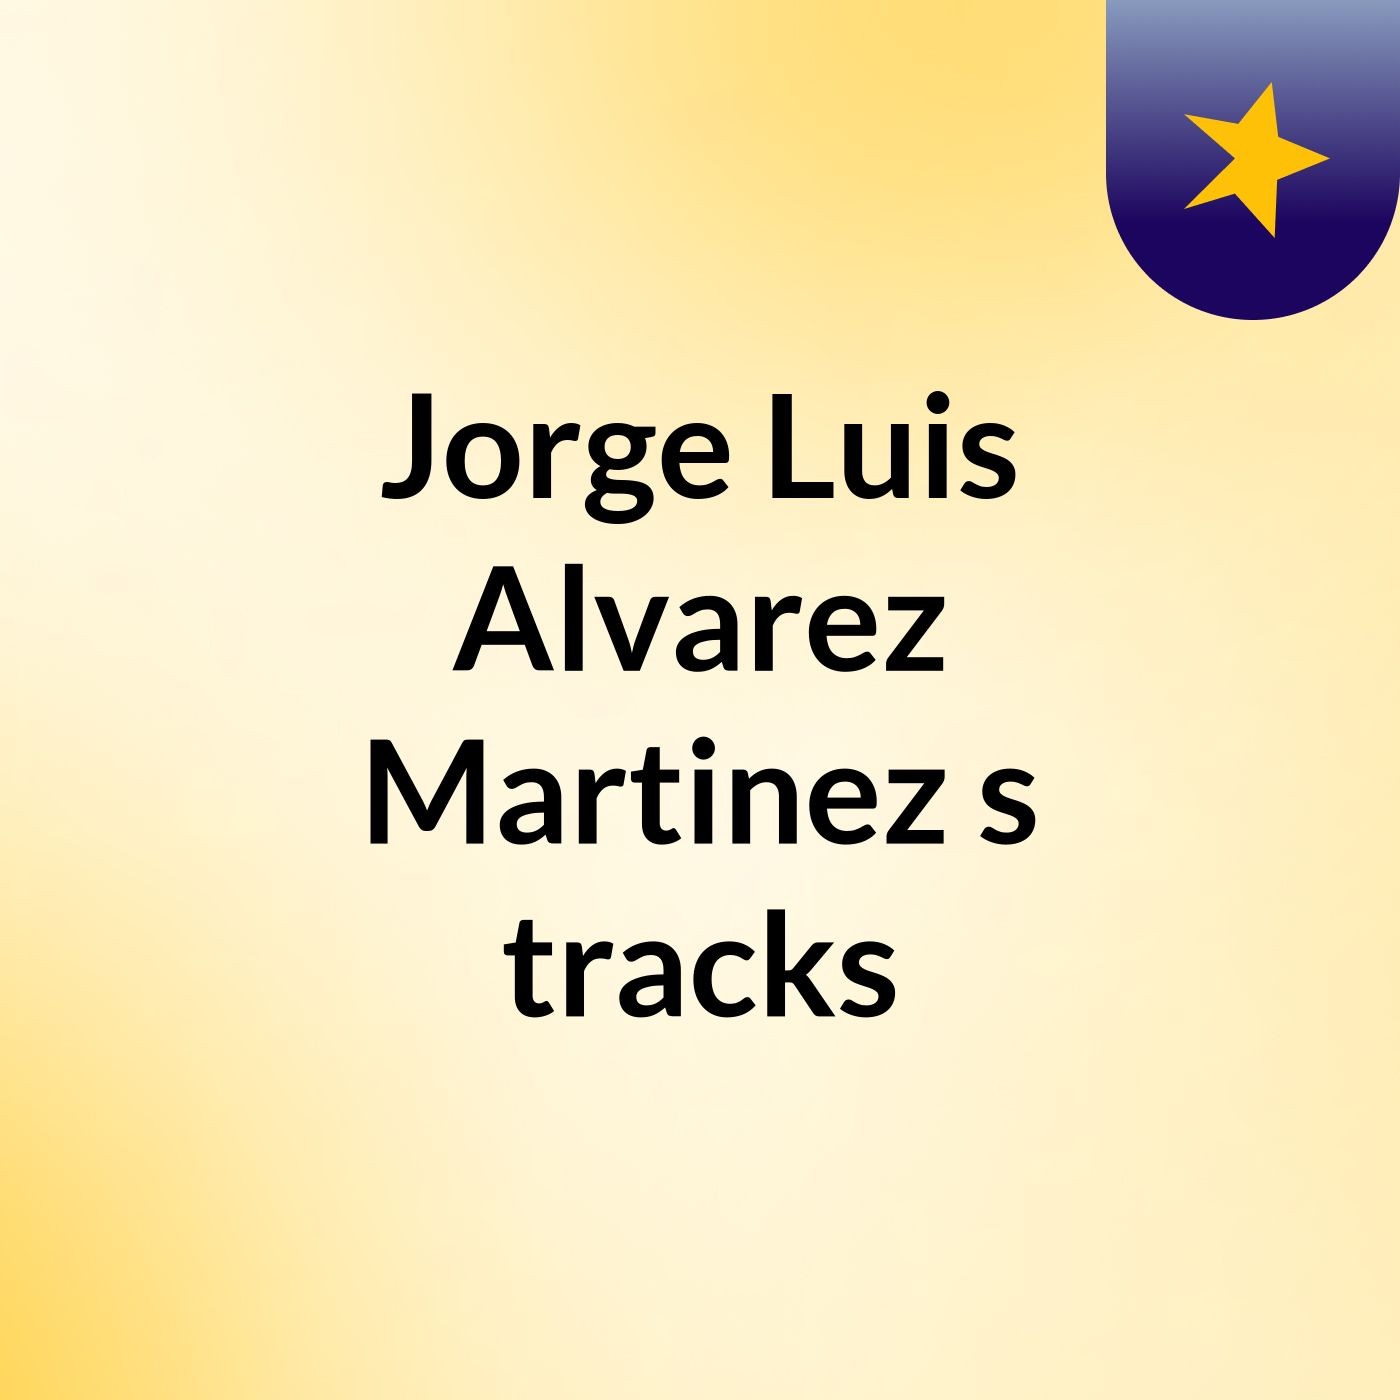 Jorge Luis Alvarez Martinez's tracks